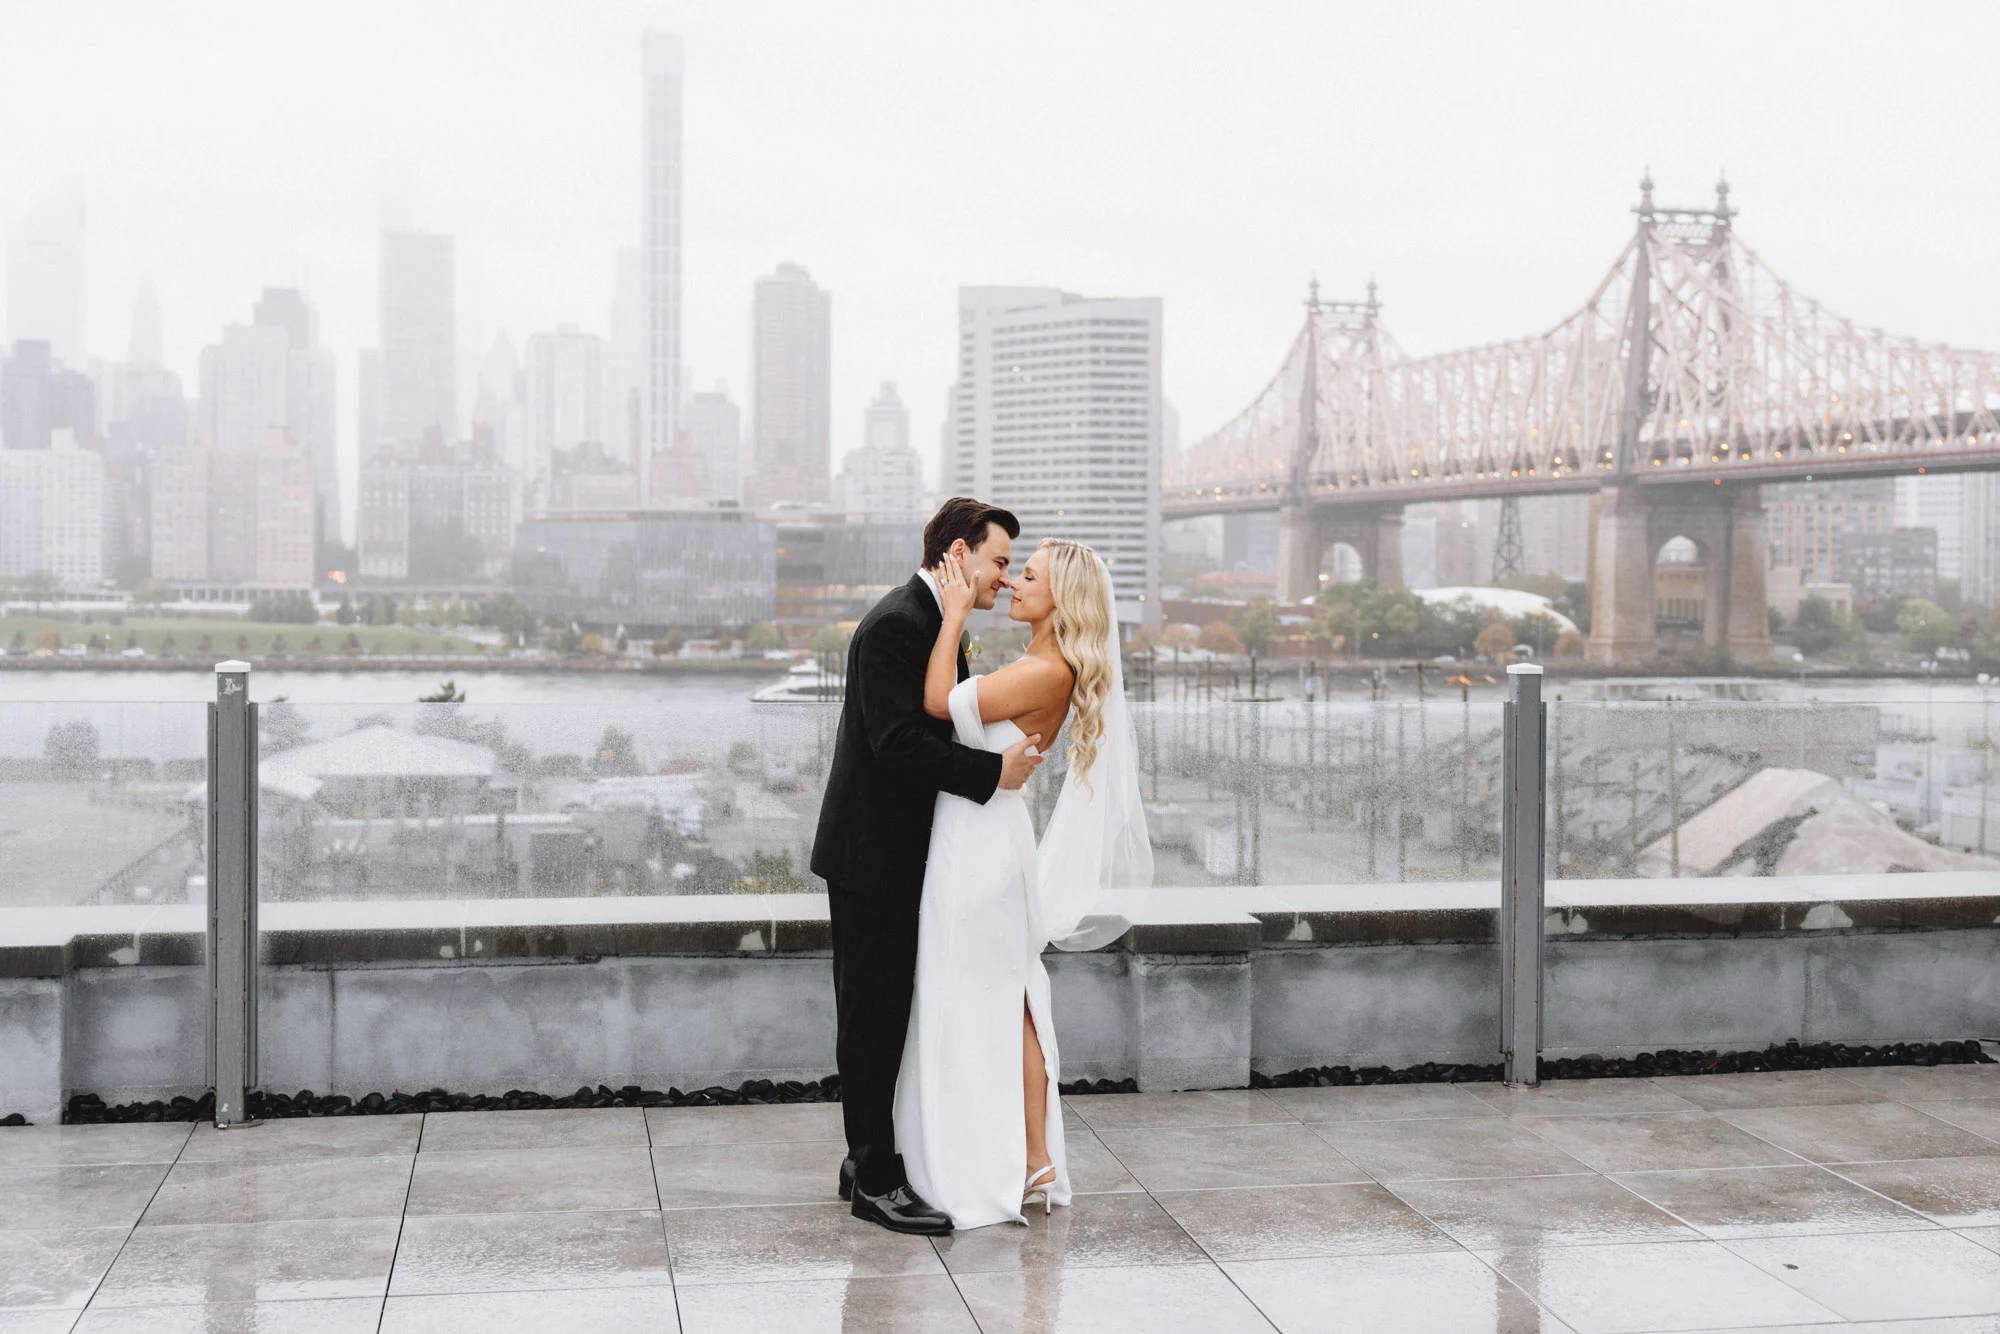 Danila and Lana’s Wedding Photo & Video | New York